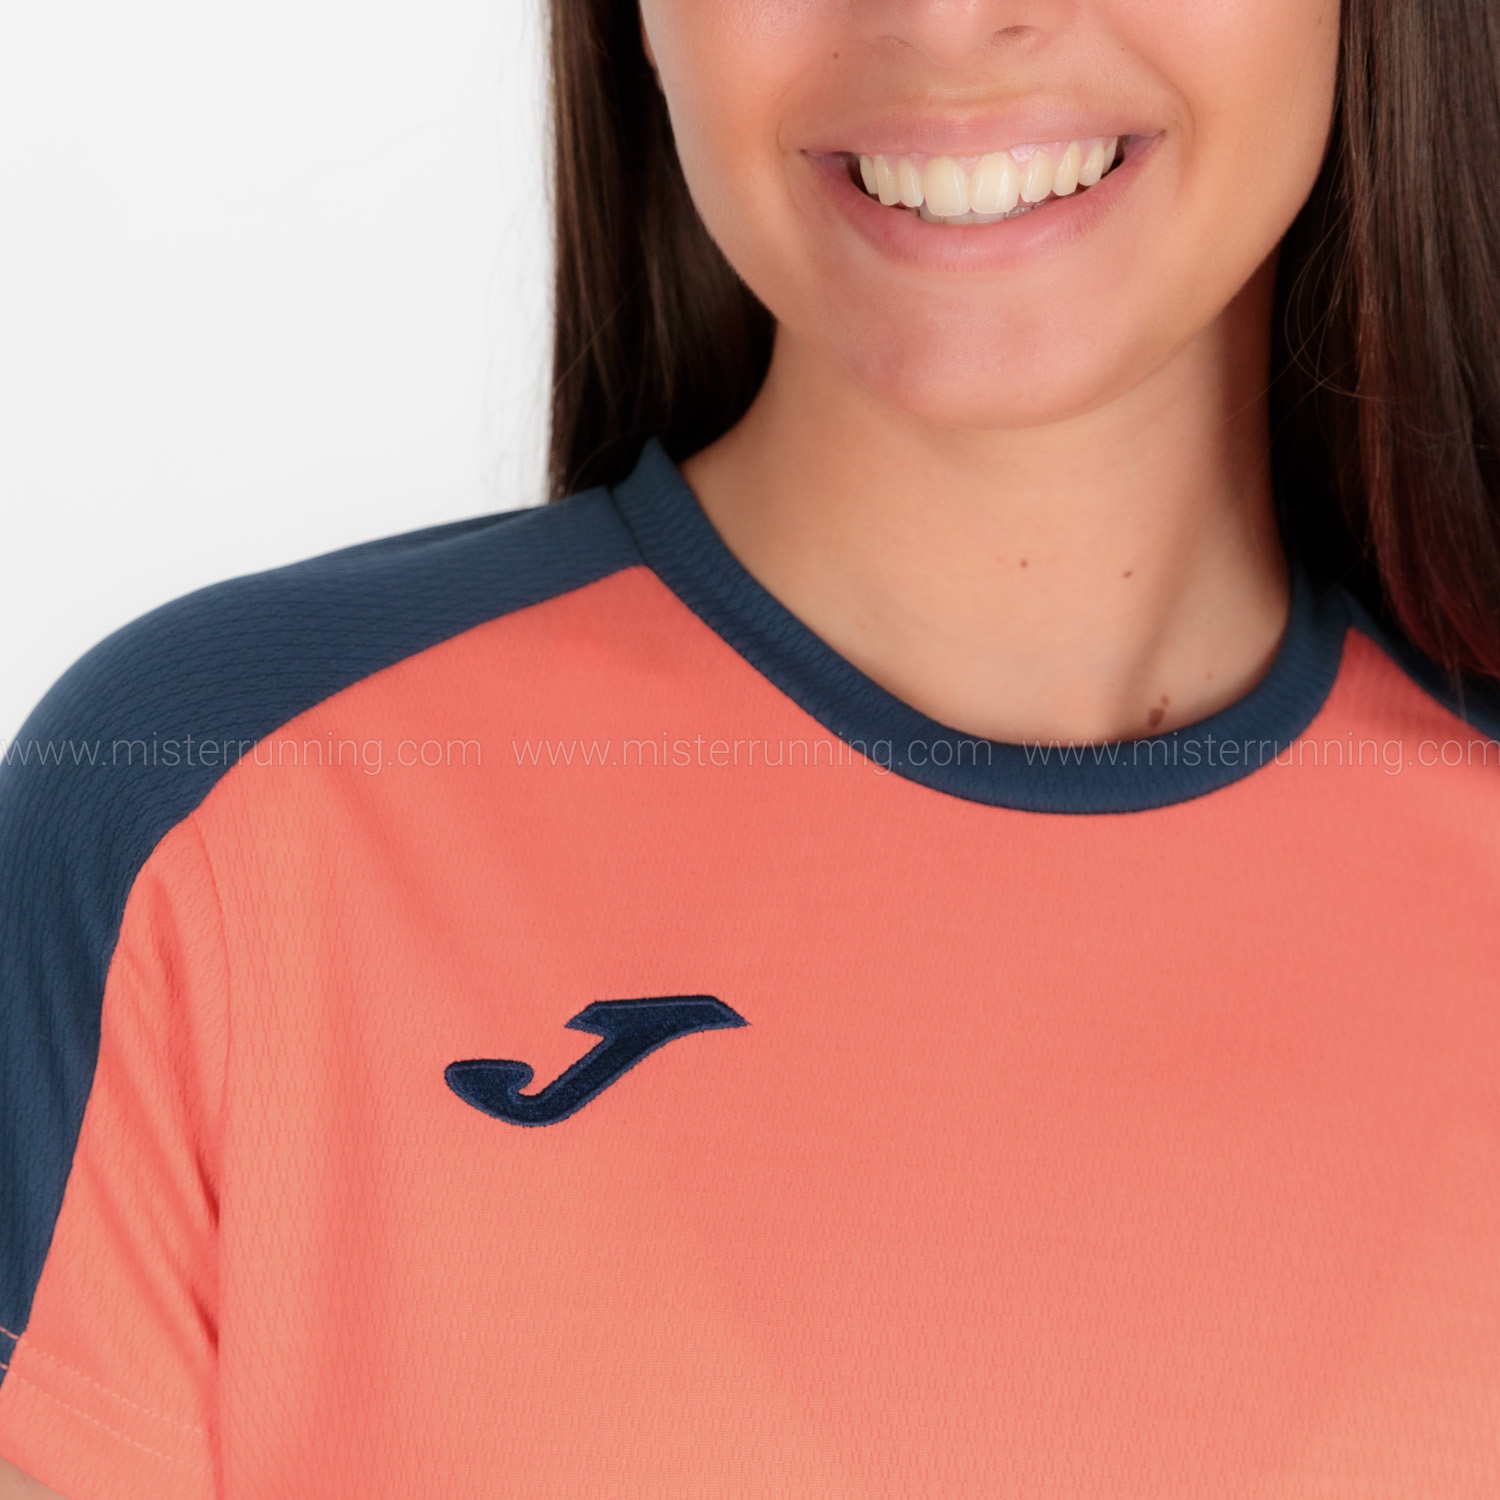 Joma Eco Championship Logo Camiseta - Fluor Orange/Navy